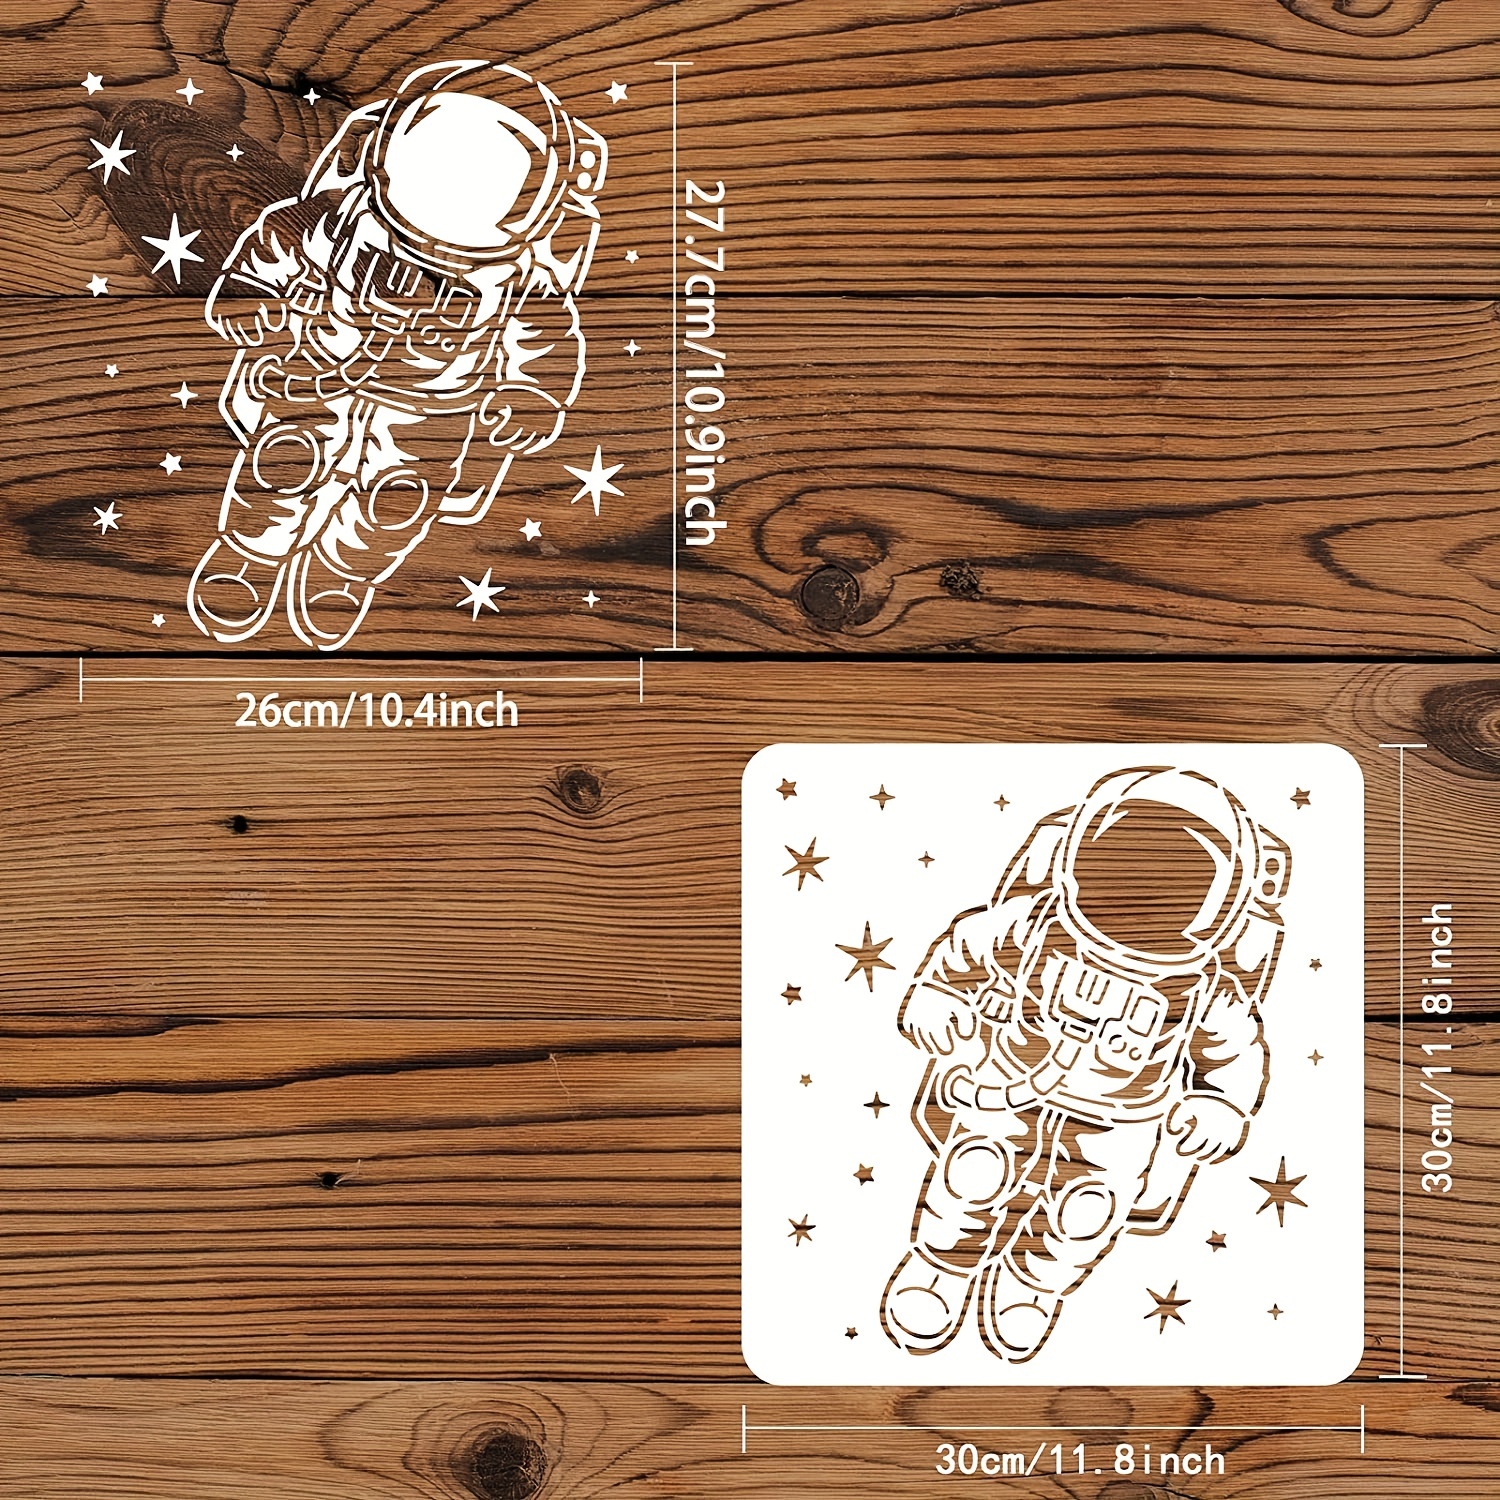 Reusable Plastic Stencils Choice Of Design 18 x 26cm Crafts Cards